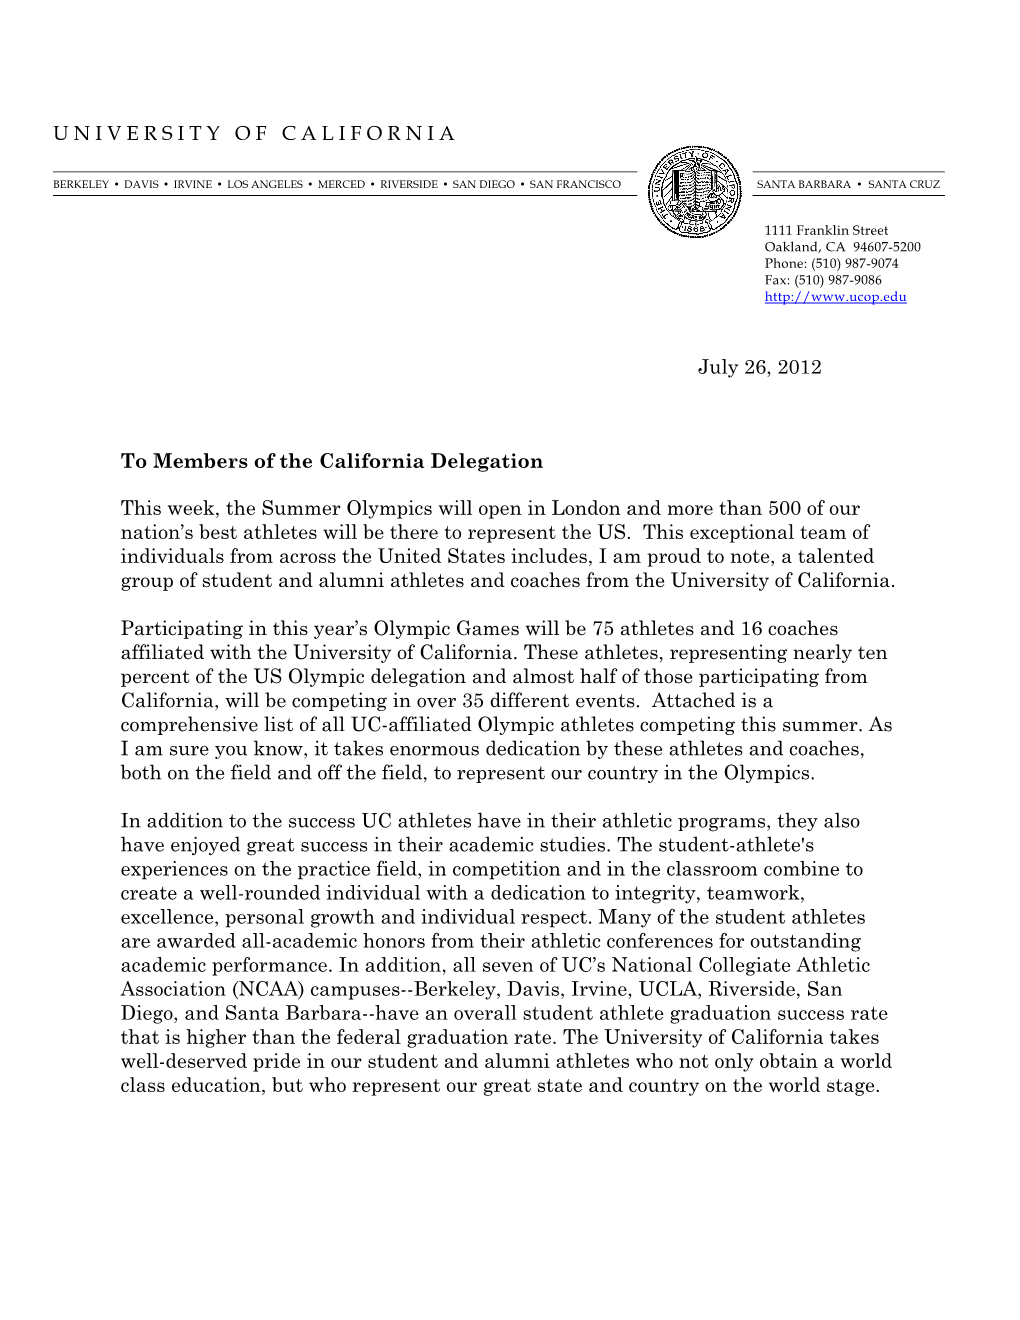 UNIVERSITY of CALIFORNIA July 26, 2012 to Members of the California